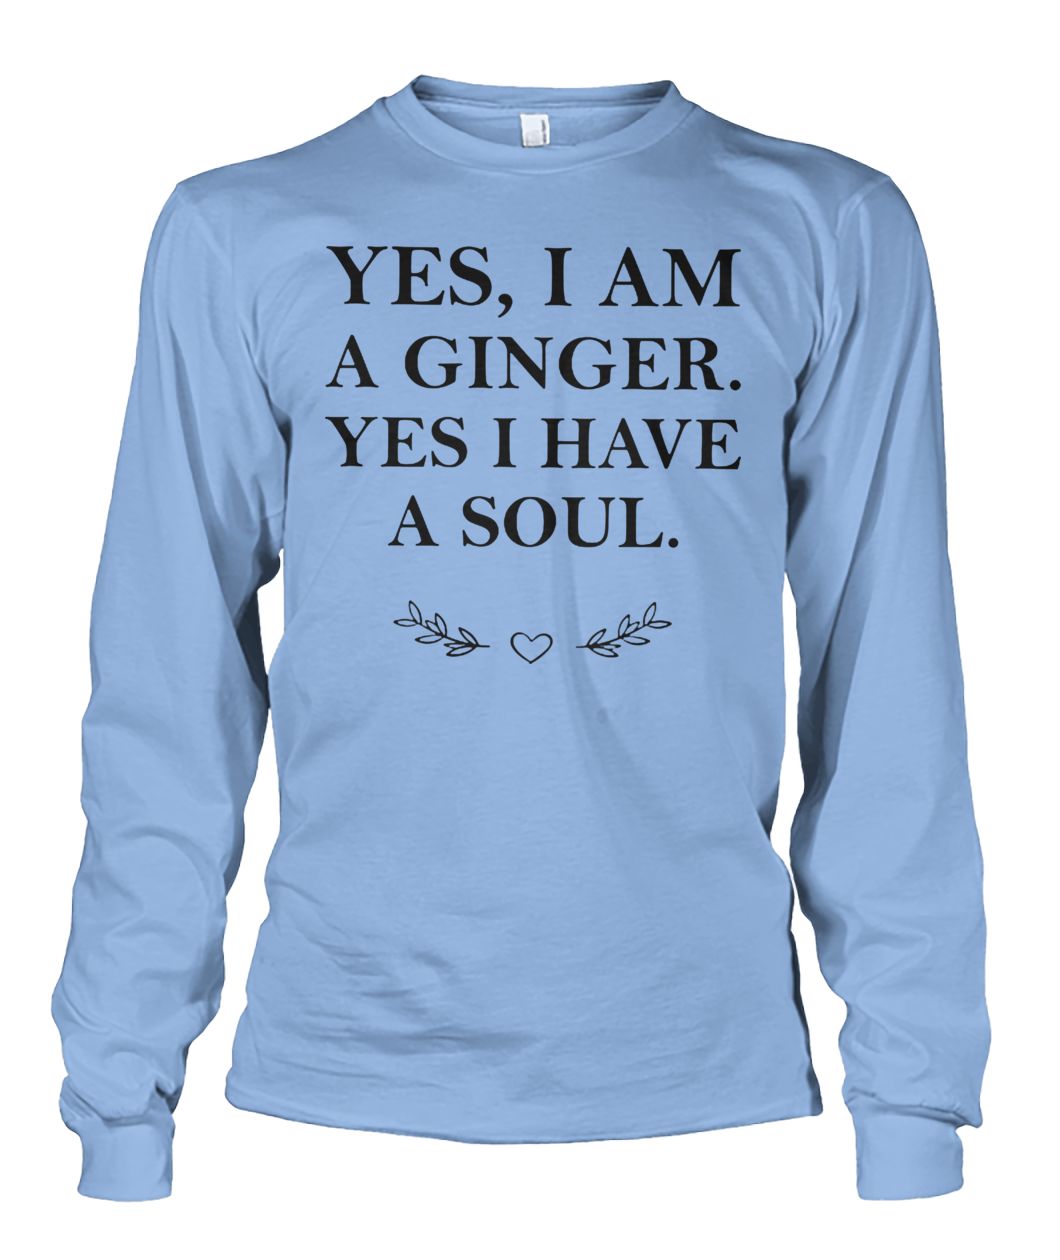 Yes I am a ginger yes I have a soul unisex long sleeve